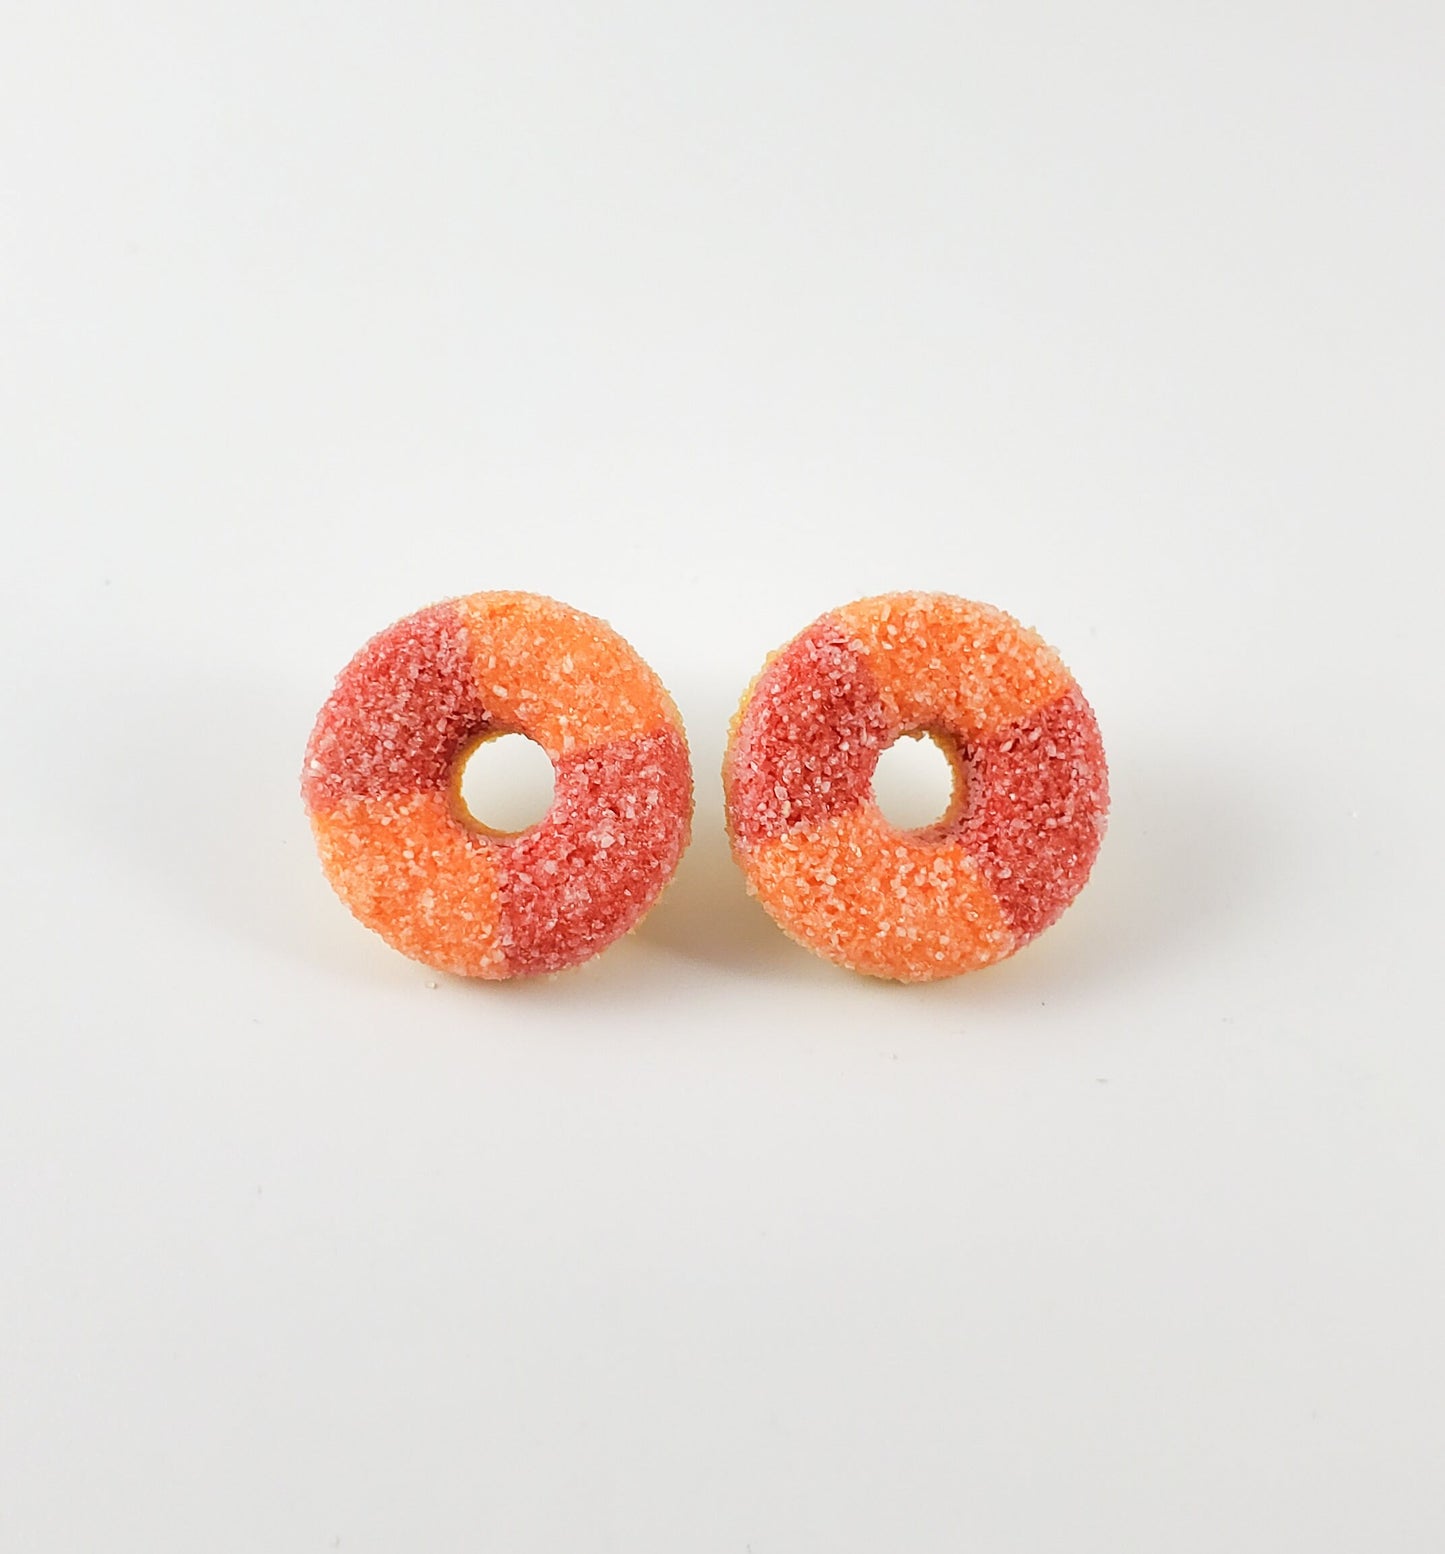 Peach ring gummy candy earrings